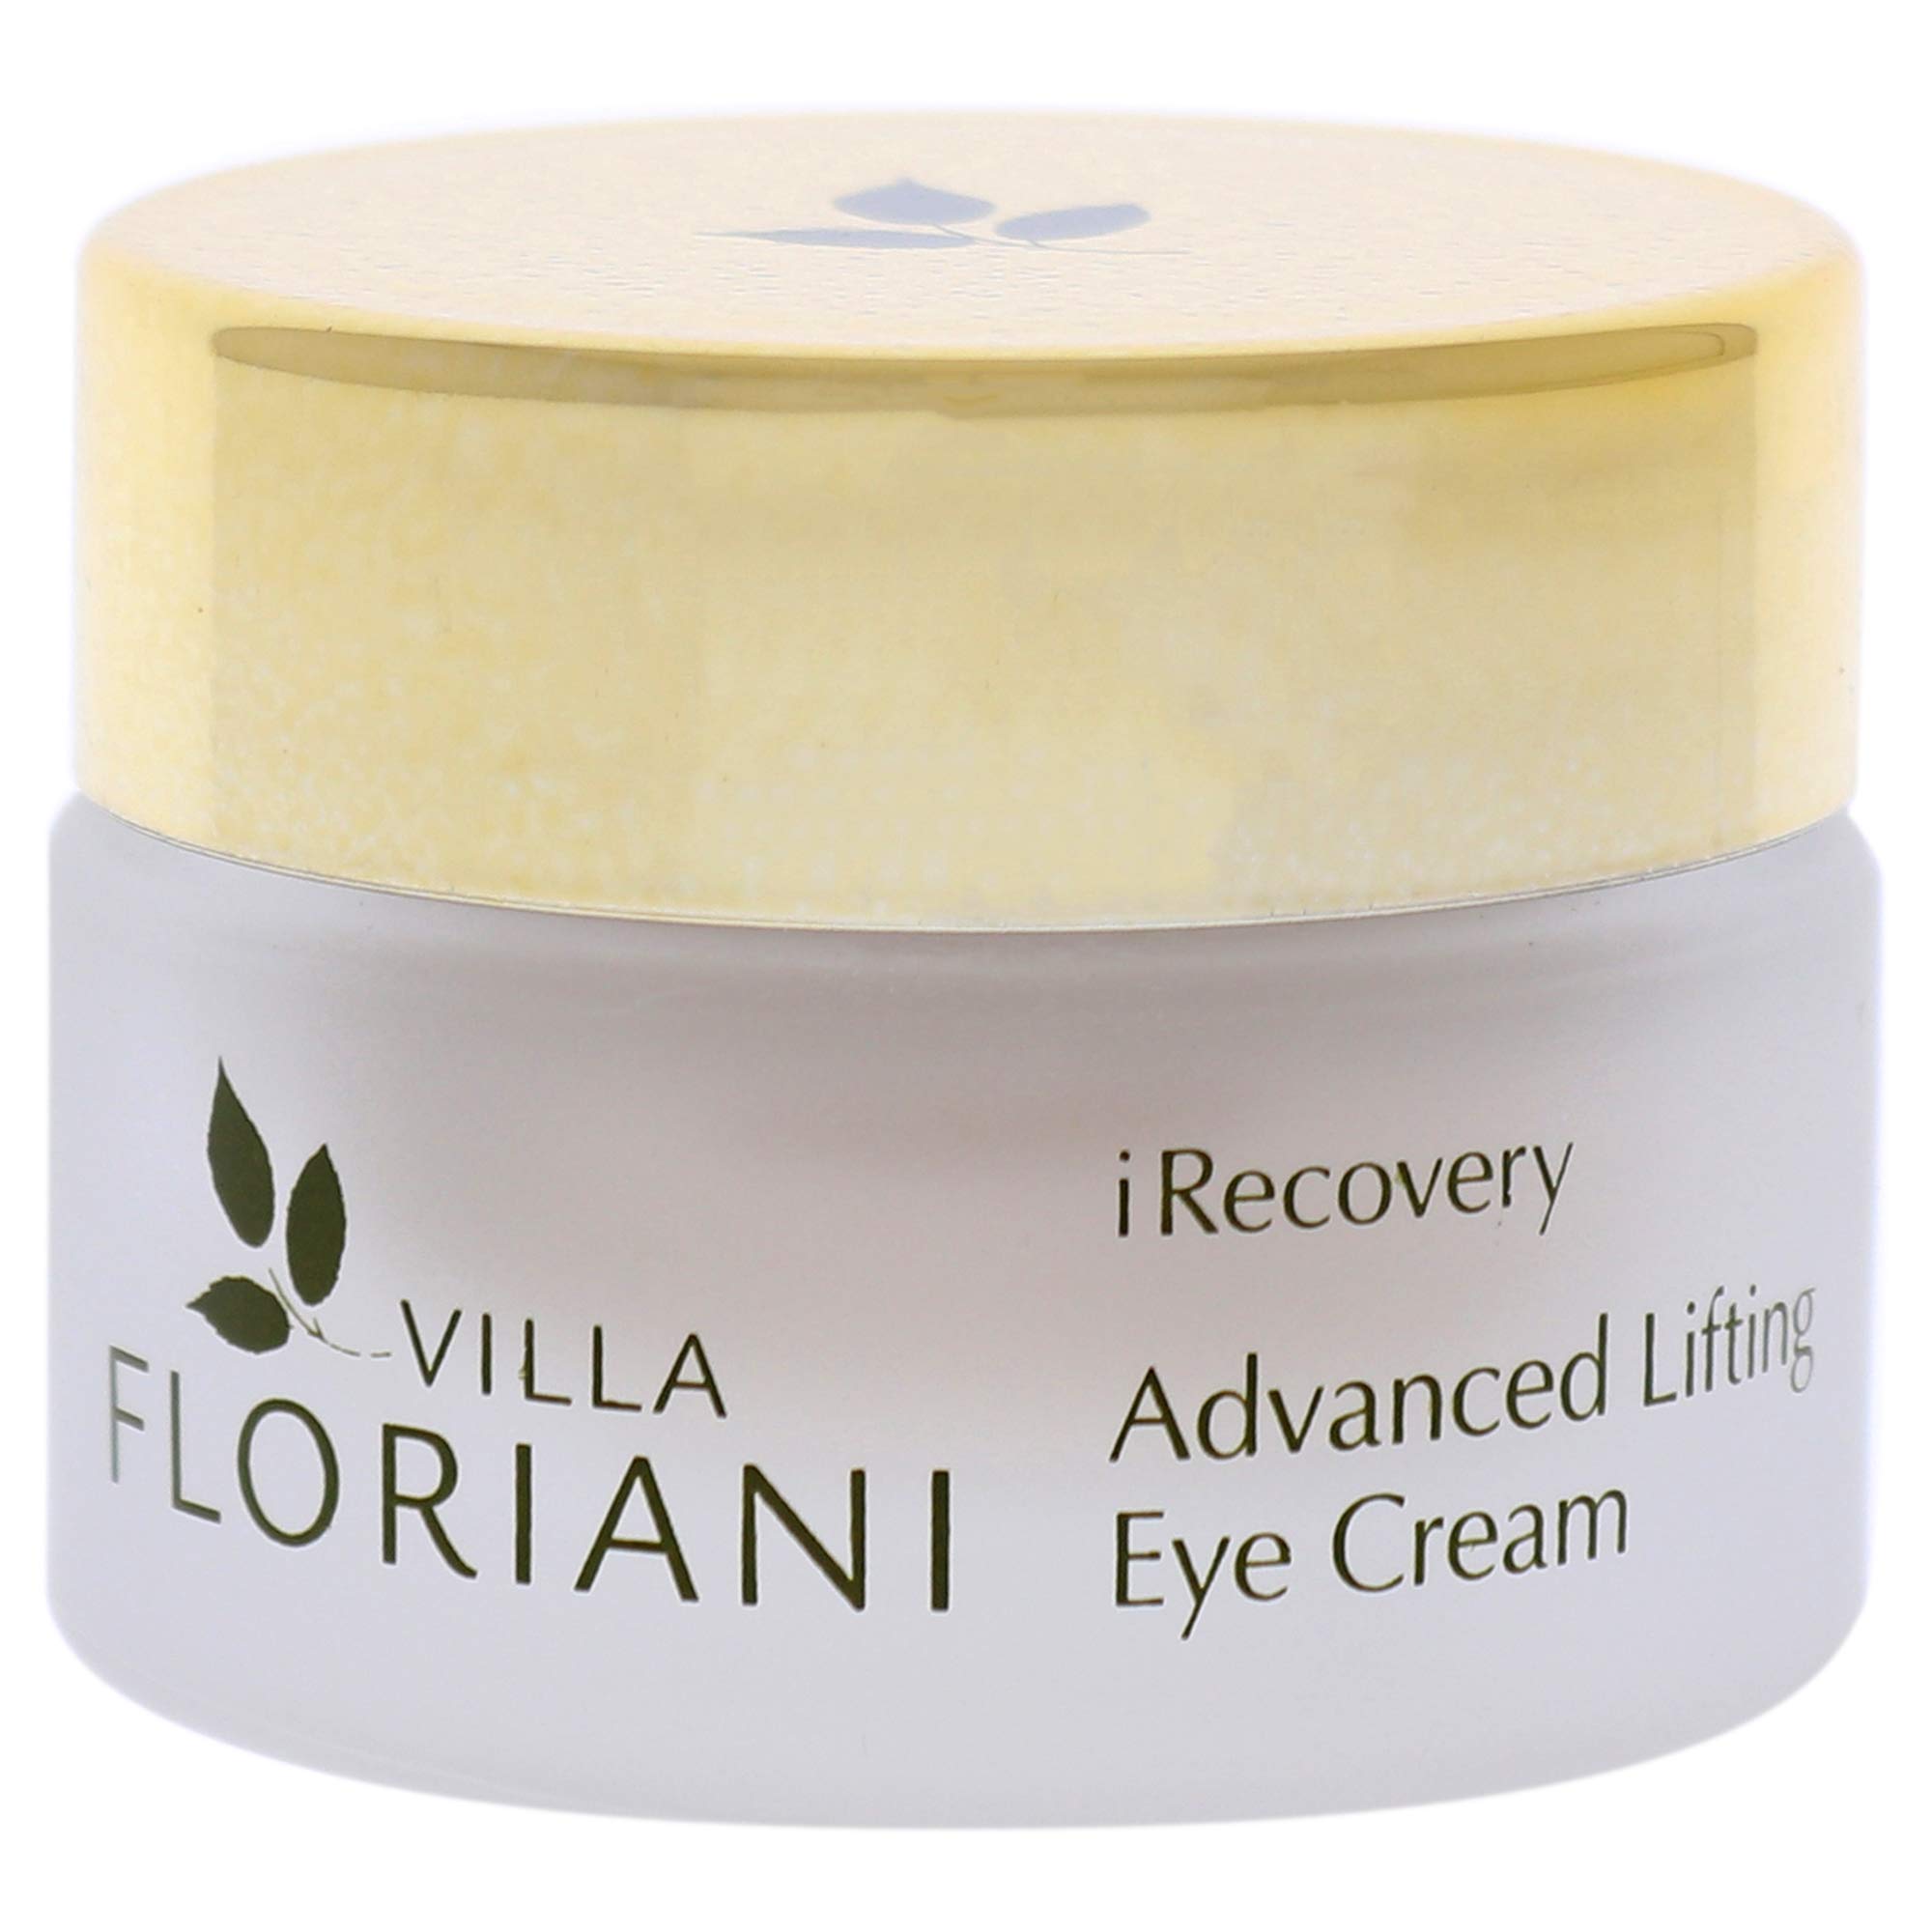 Villa Floriani Advanced Lifting Eye Cream Women Cream 0.5 oz, (I0106576)